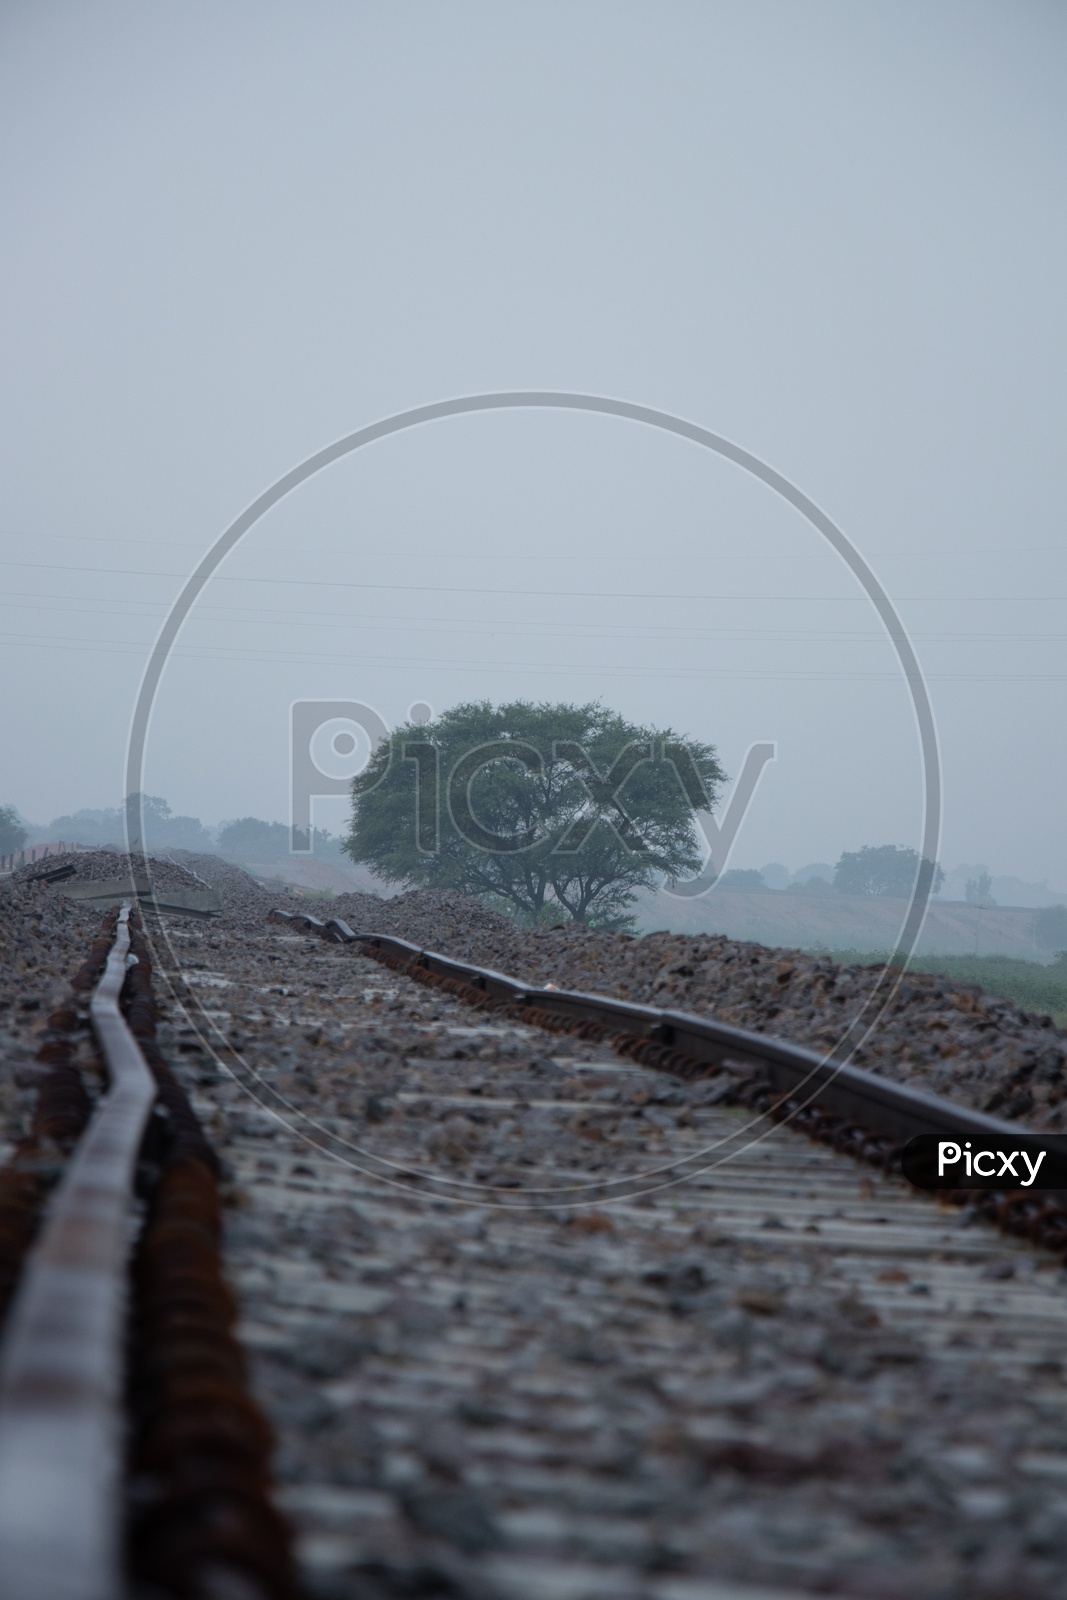 Lone Railway Track On an Foggy Morning